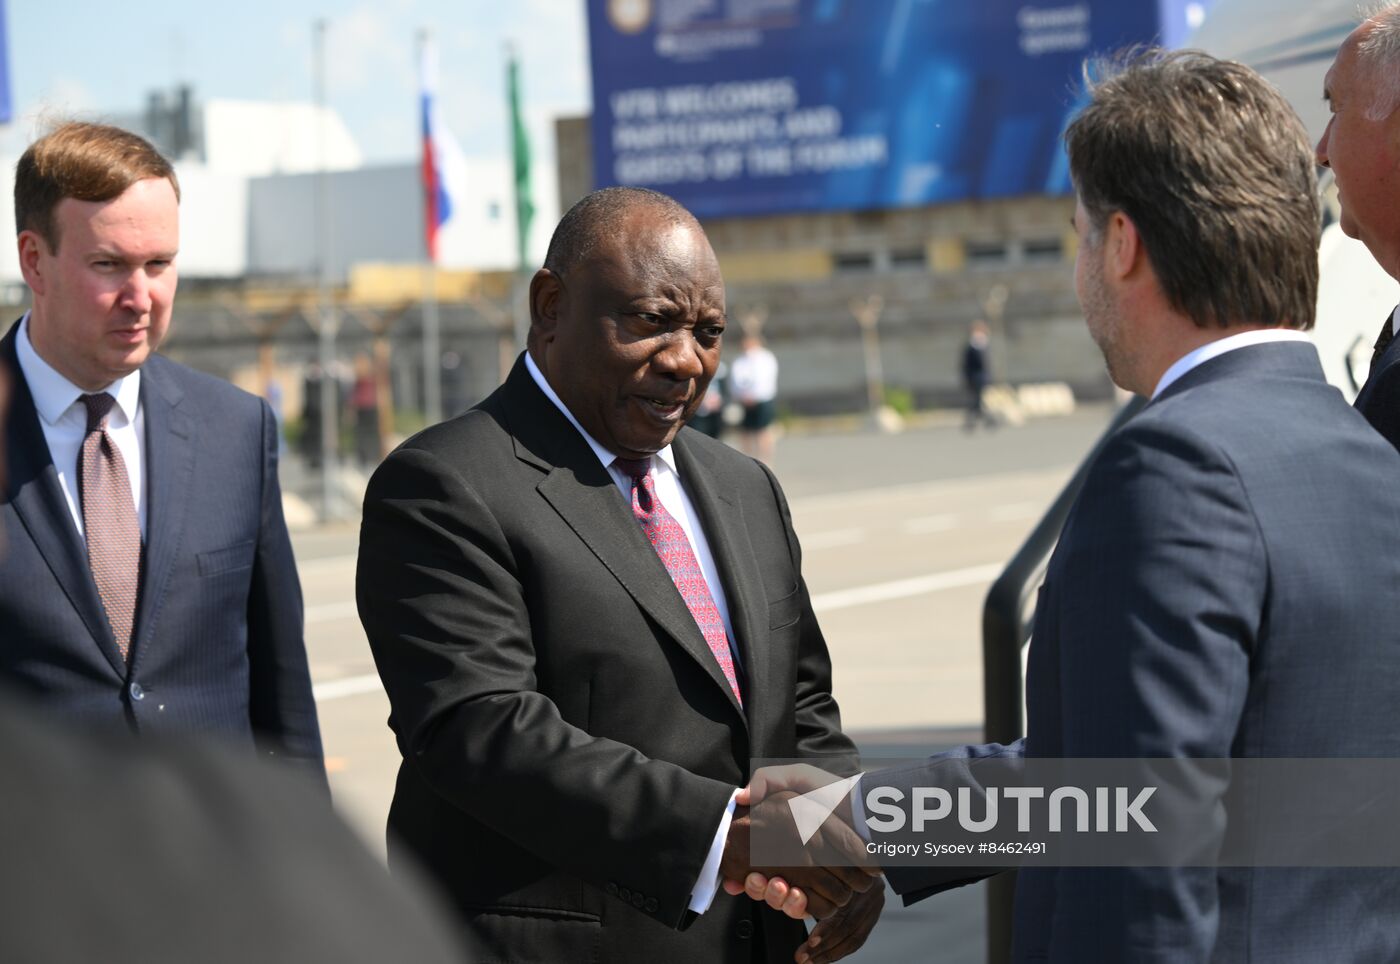 SPIEF-2023. African leaders arrive in St. Petersburg to meet with Russian President Vladimir Putin